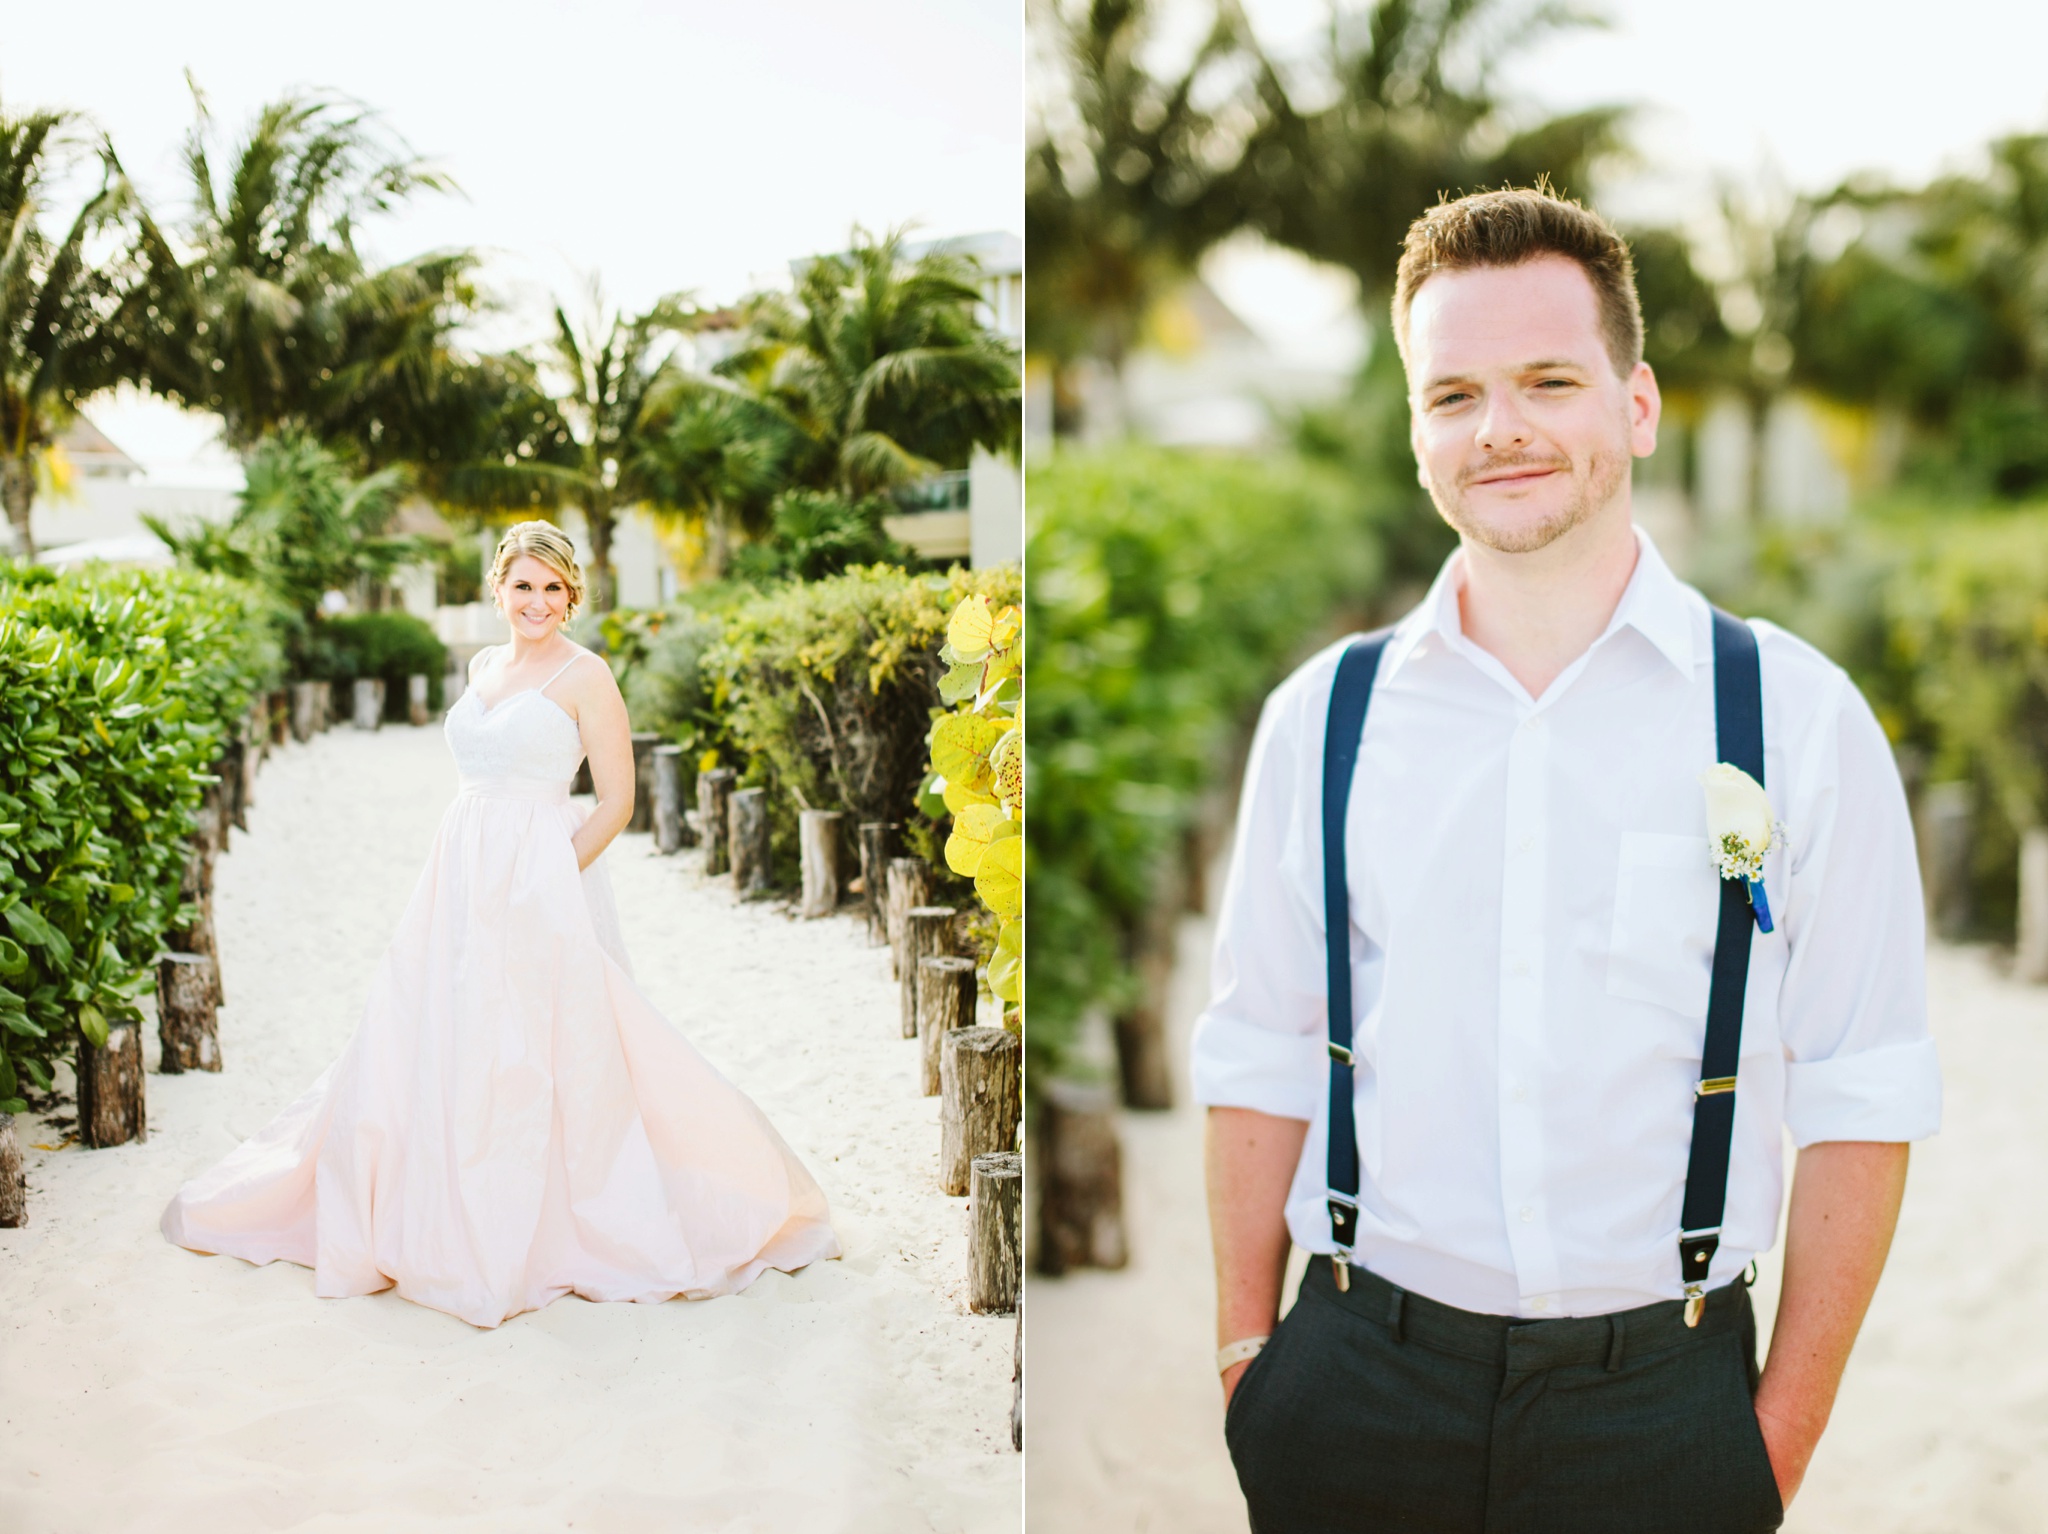 Moon Palace Resort Cancun Mexico Wedding Photos Bride and Groom Individually at Sunset